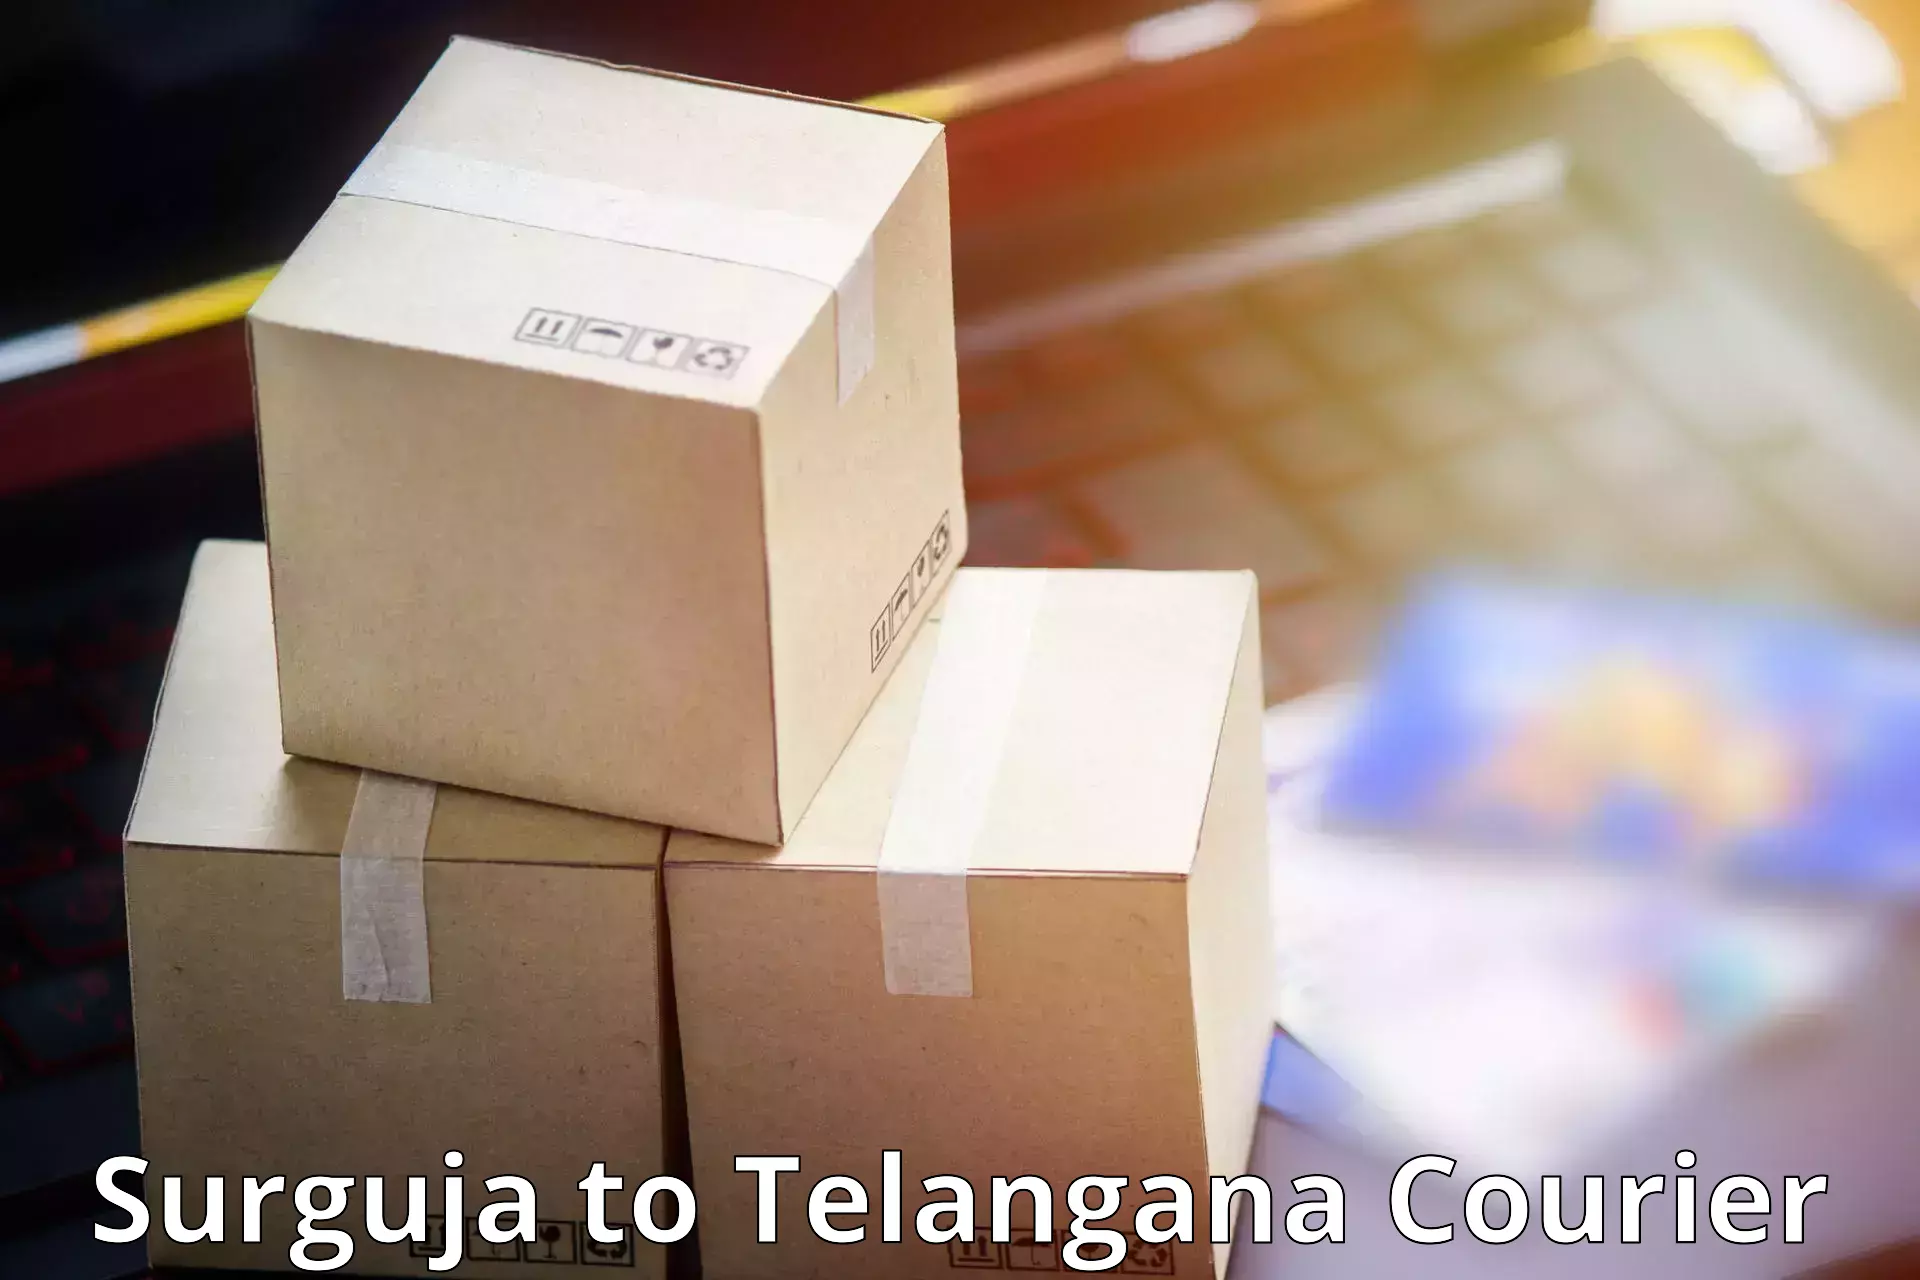 Multi-service courier options Surguja to Padmajiwadi